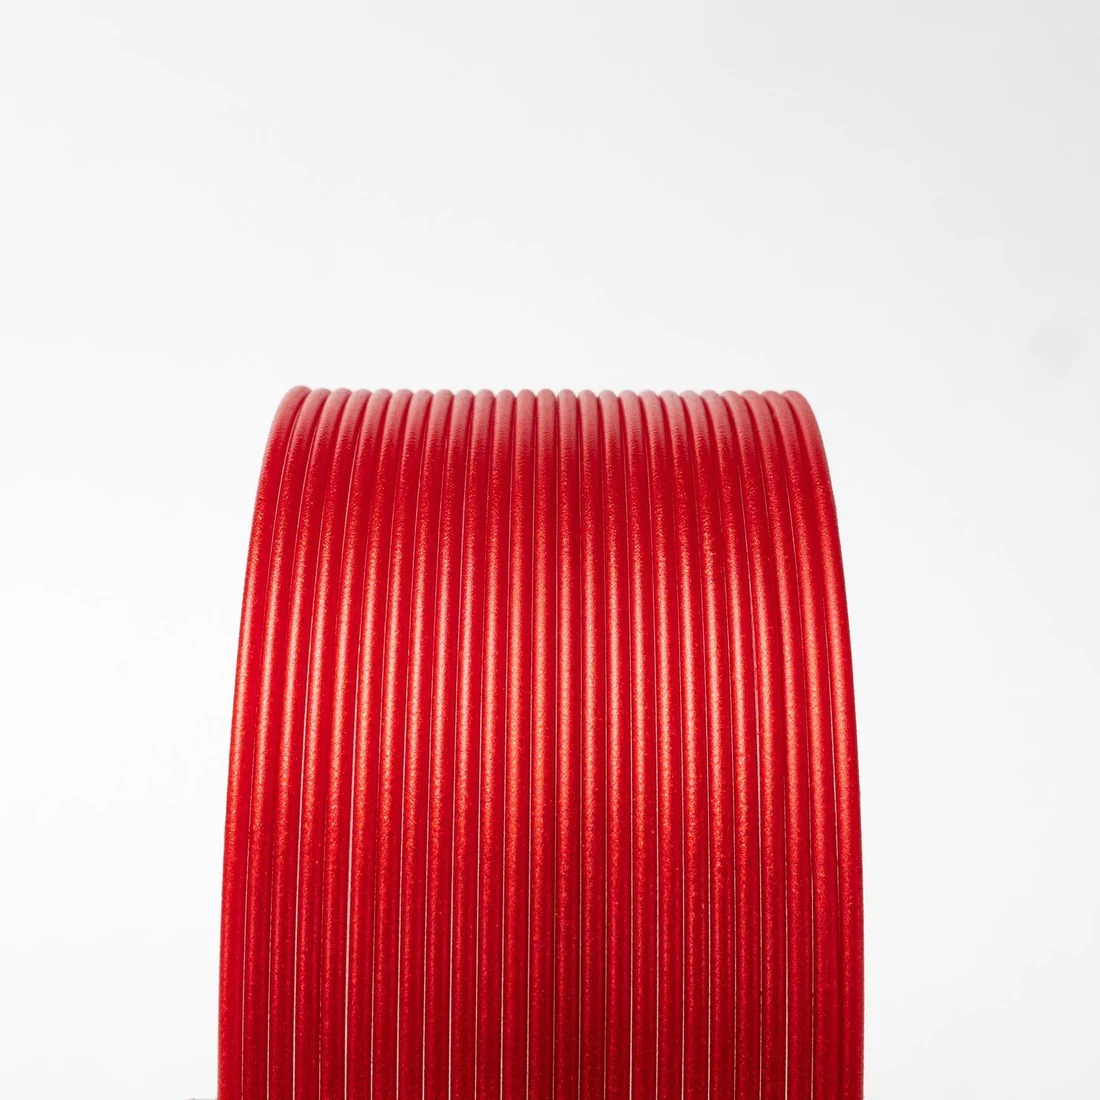 Candy Apple Metallic Red HTPLA  2.85mm 3D printing filament